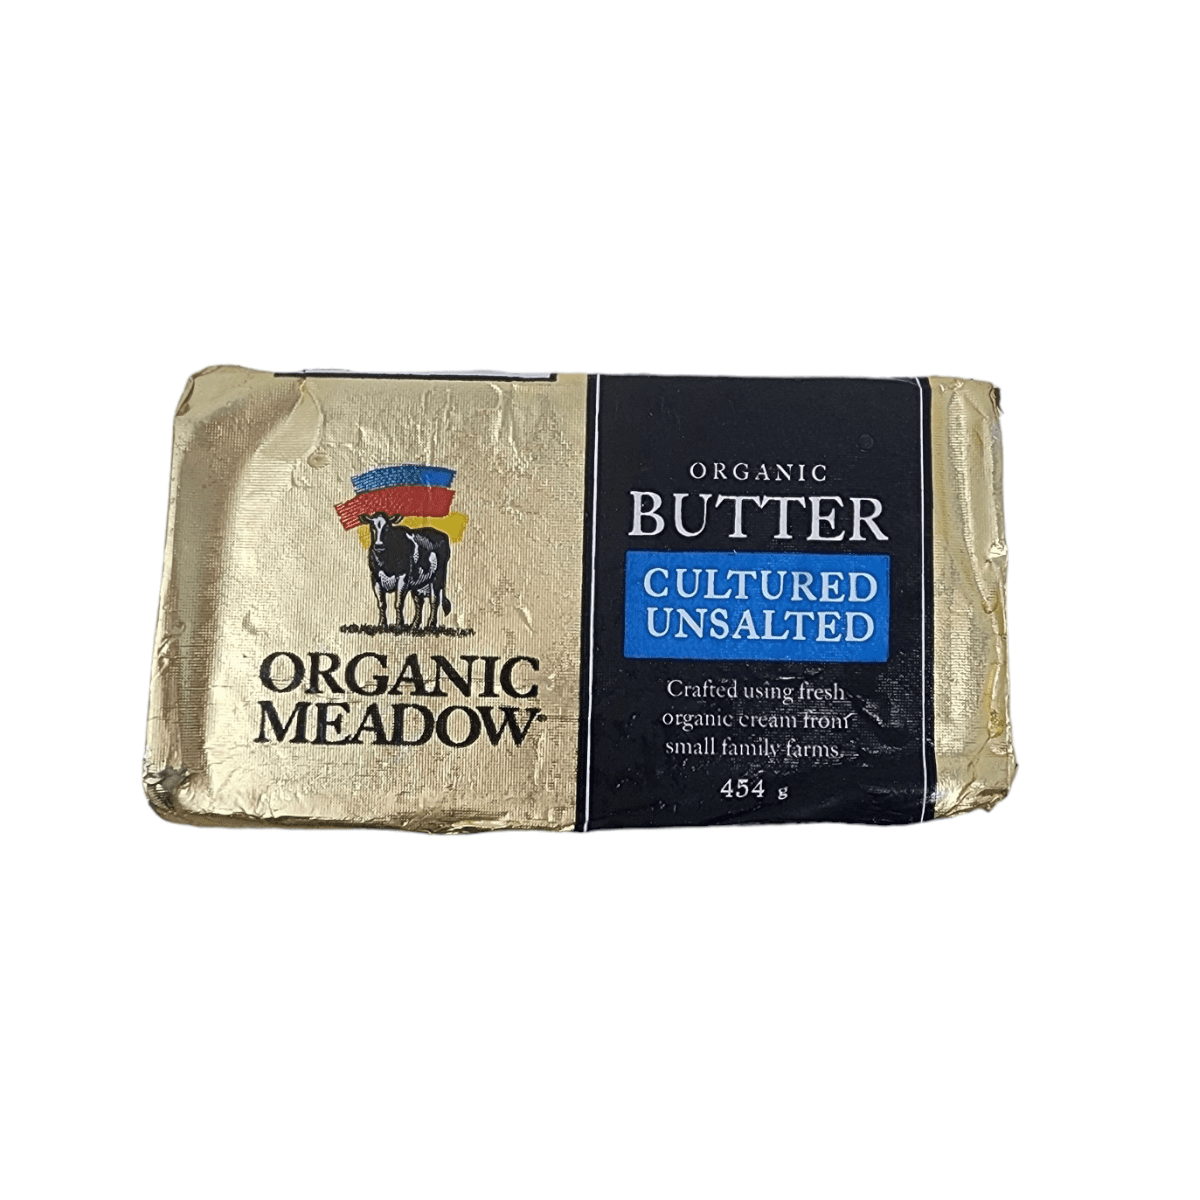 Organic Meadow Butter Unsalted (454g)